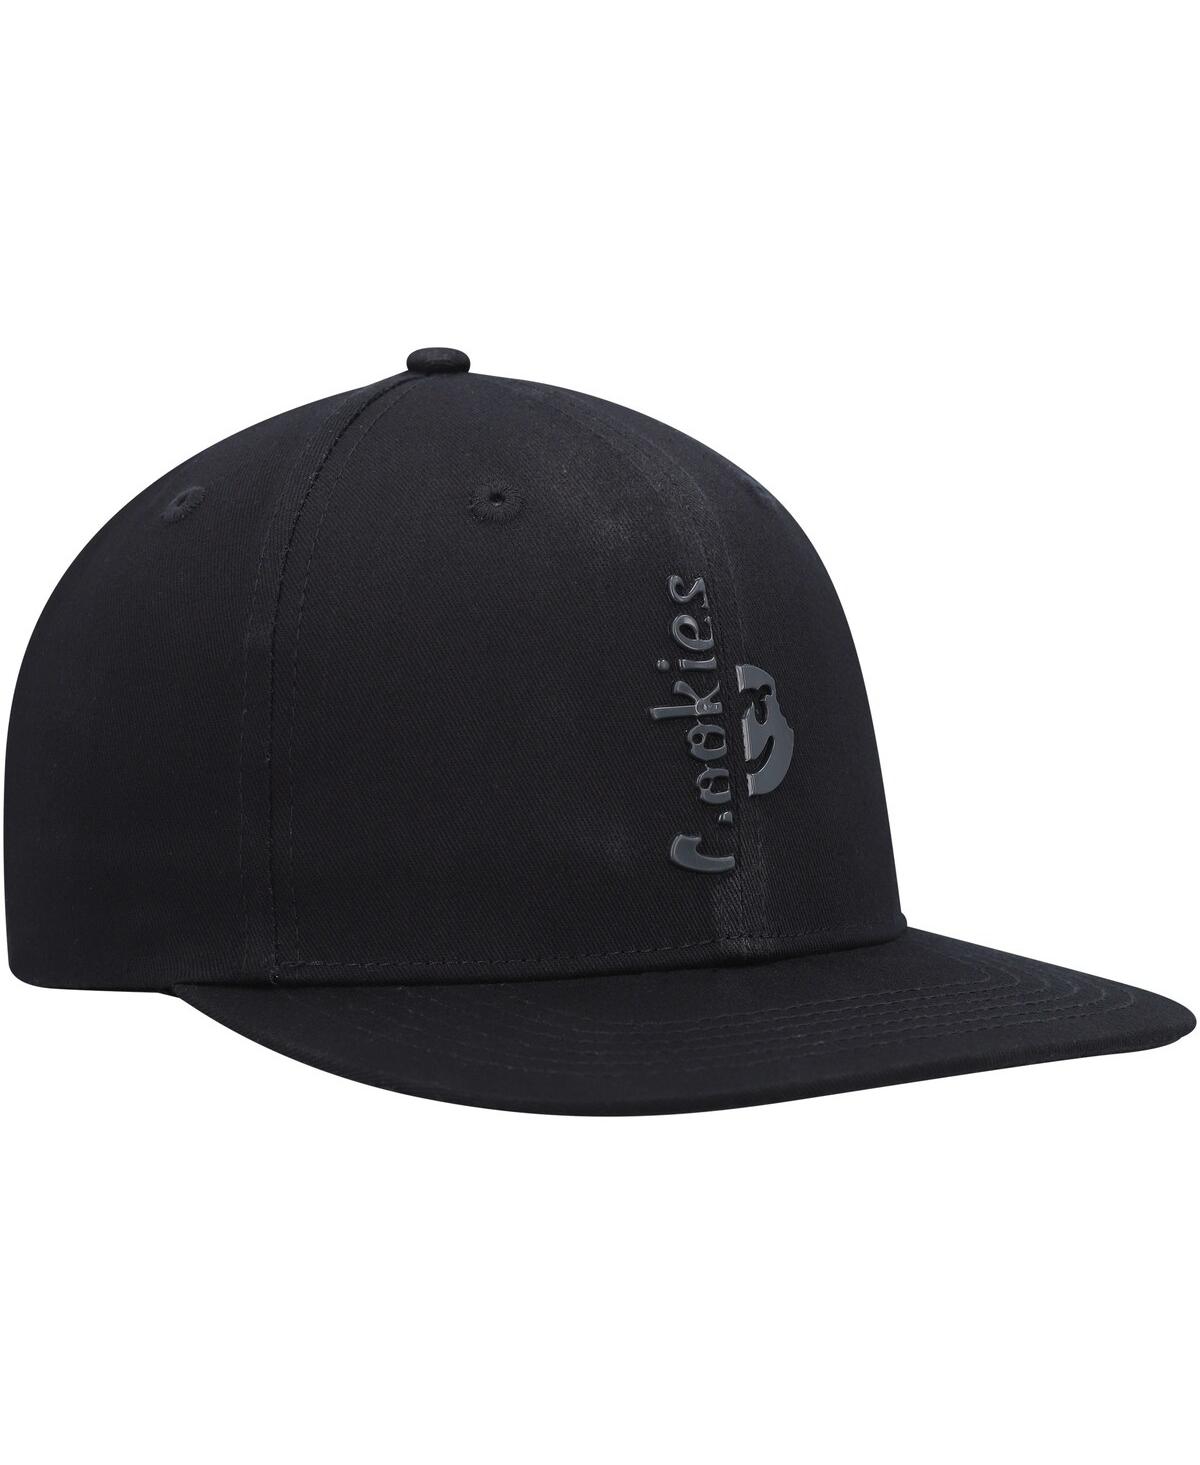 Shop Cookies Men's  Black Searchlight Snapback Hat